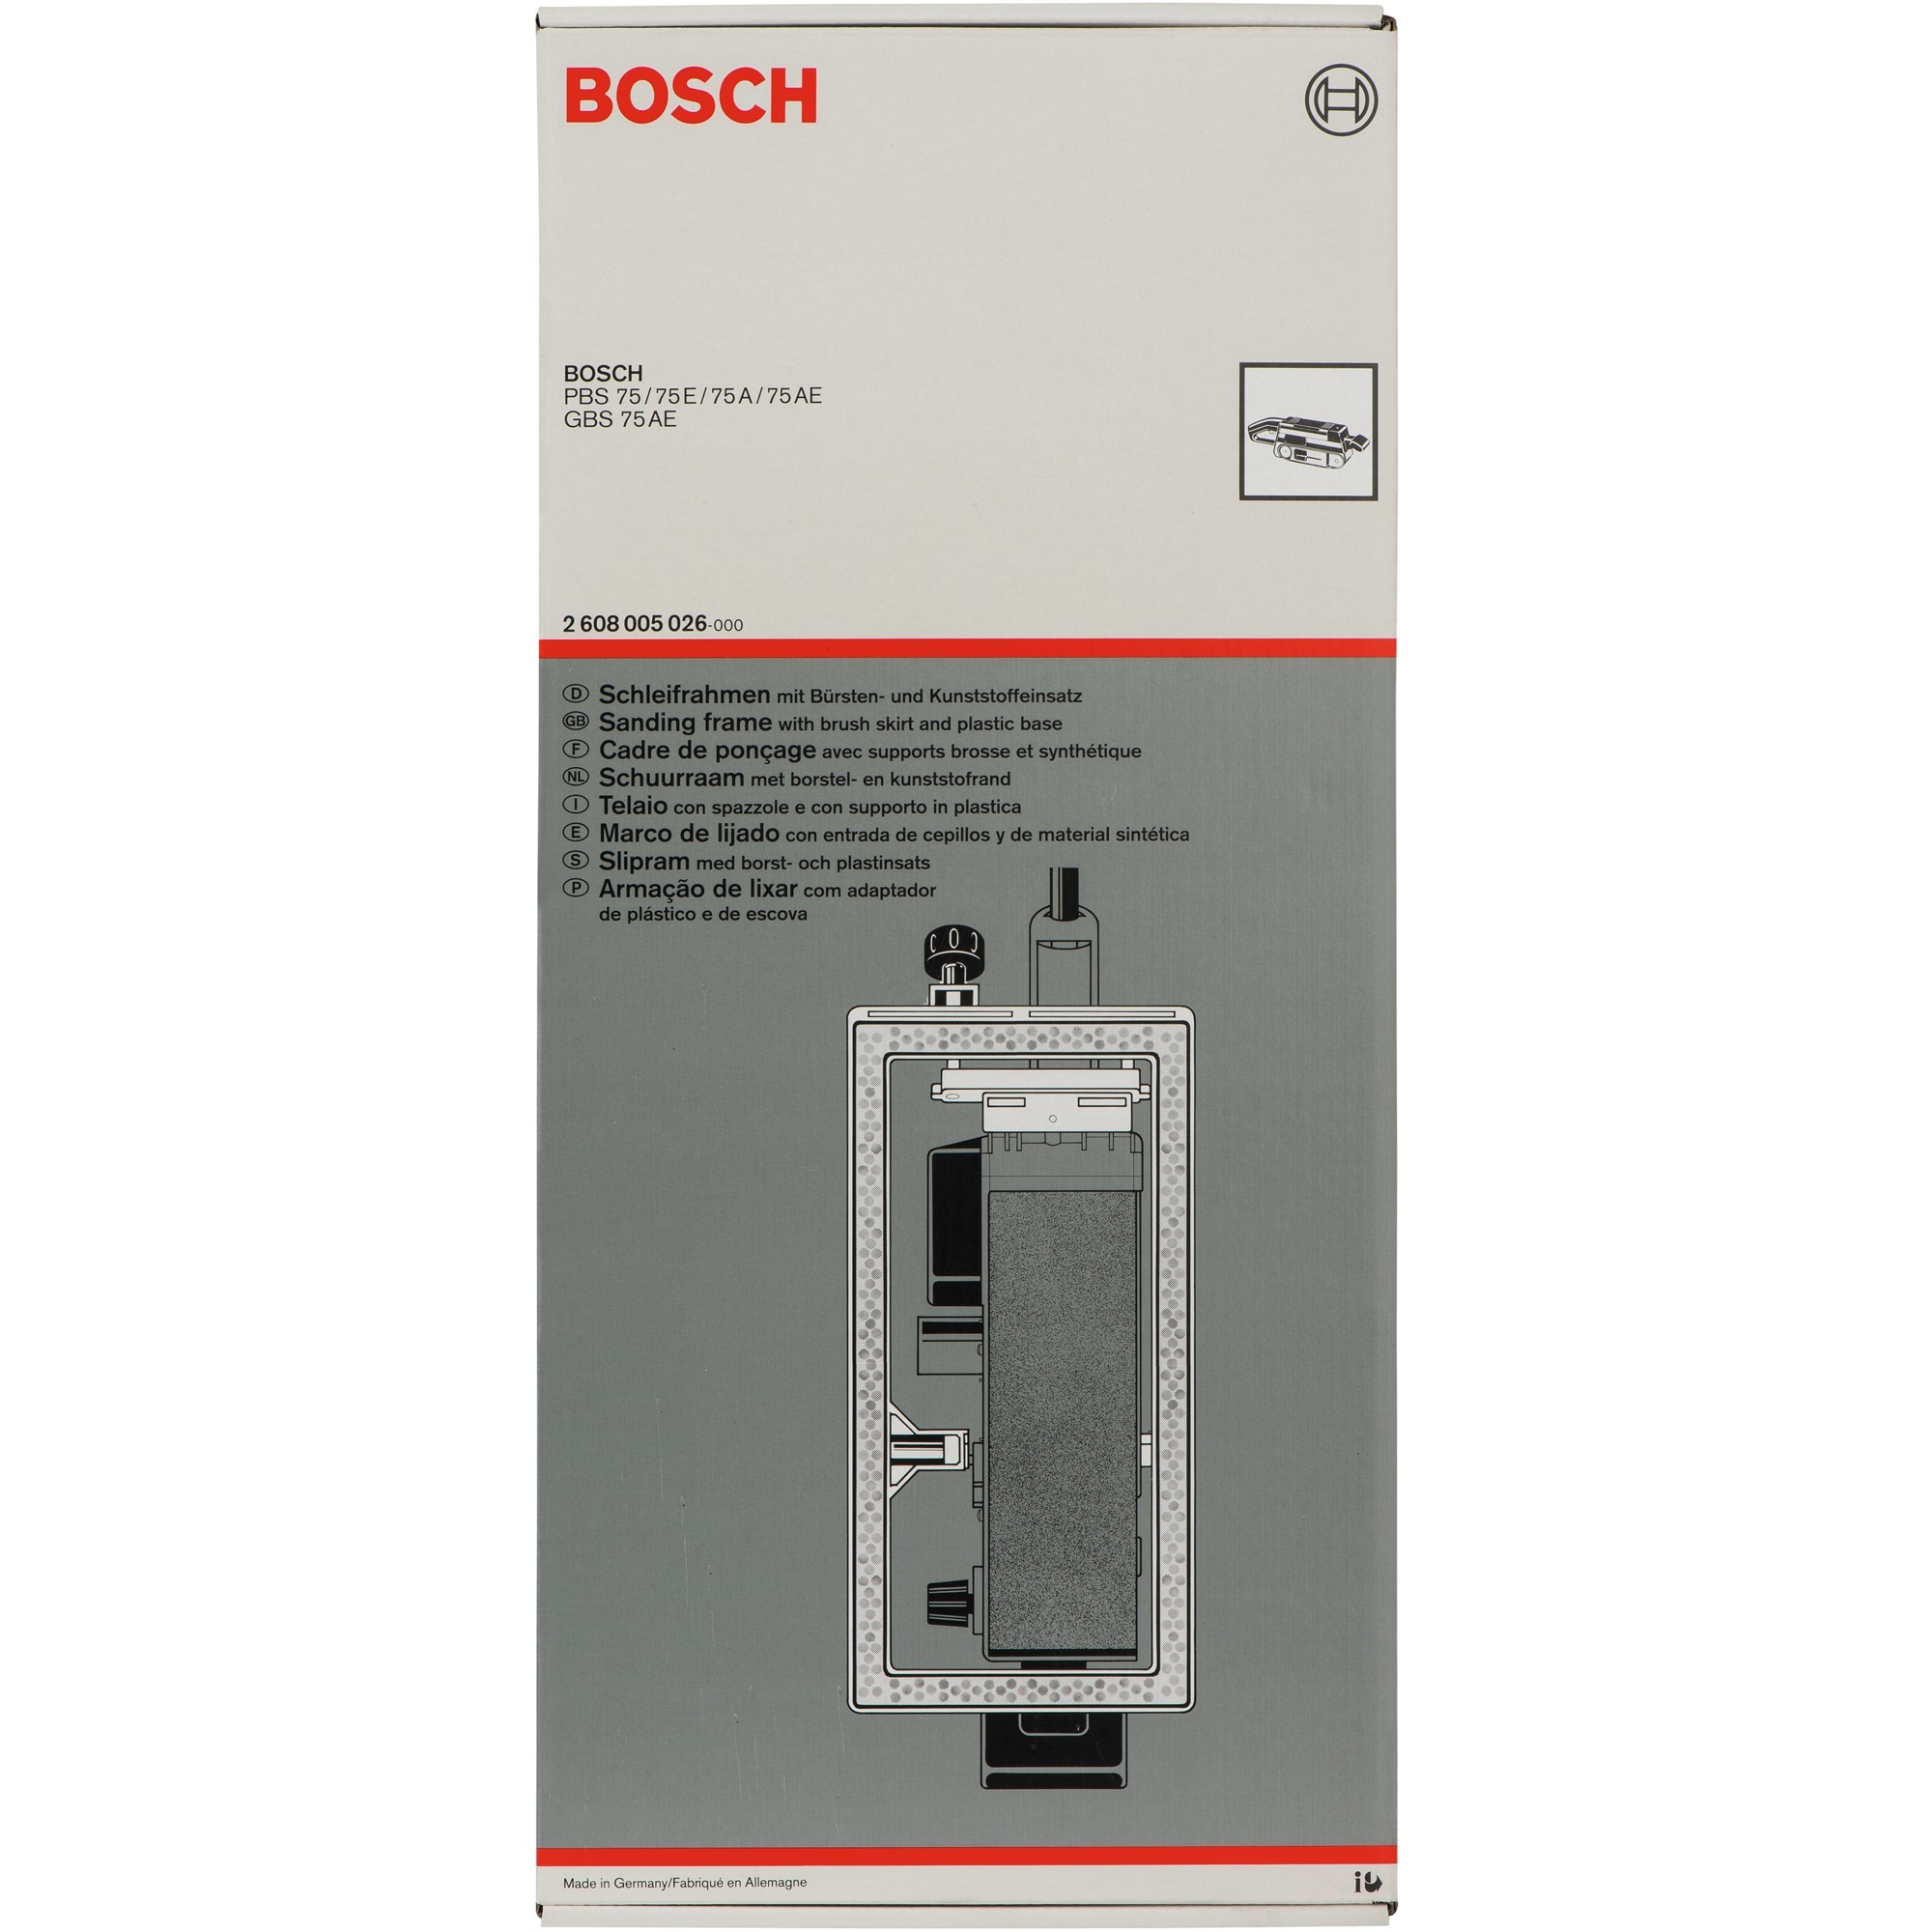 Bosch schleifrahmen pbs 75, gbs 75 a/ae